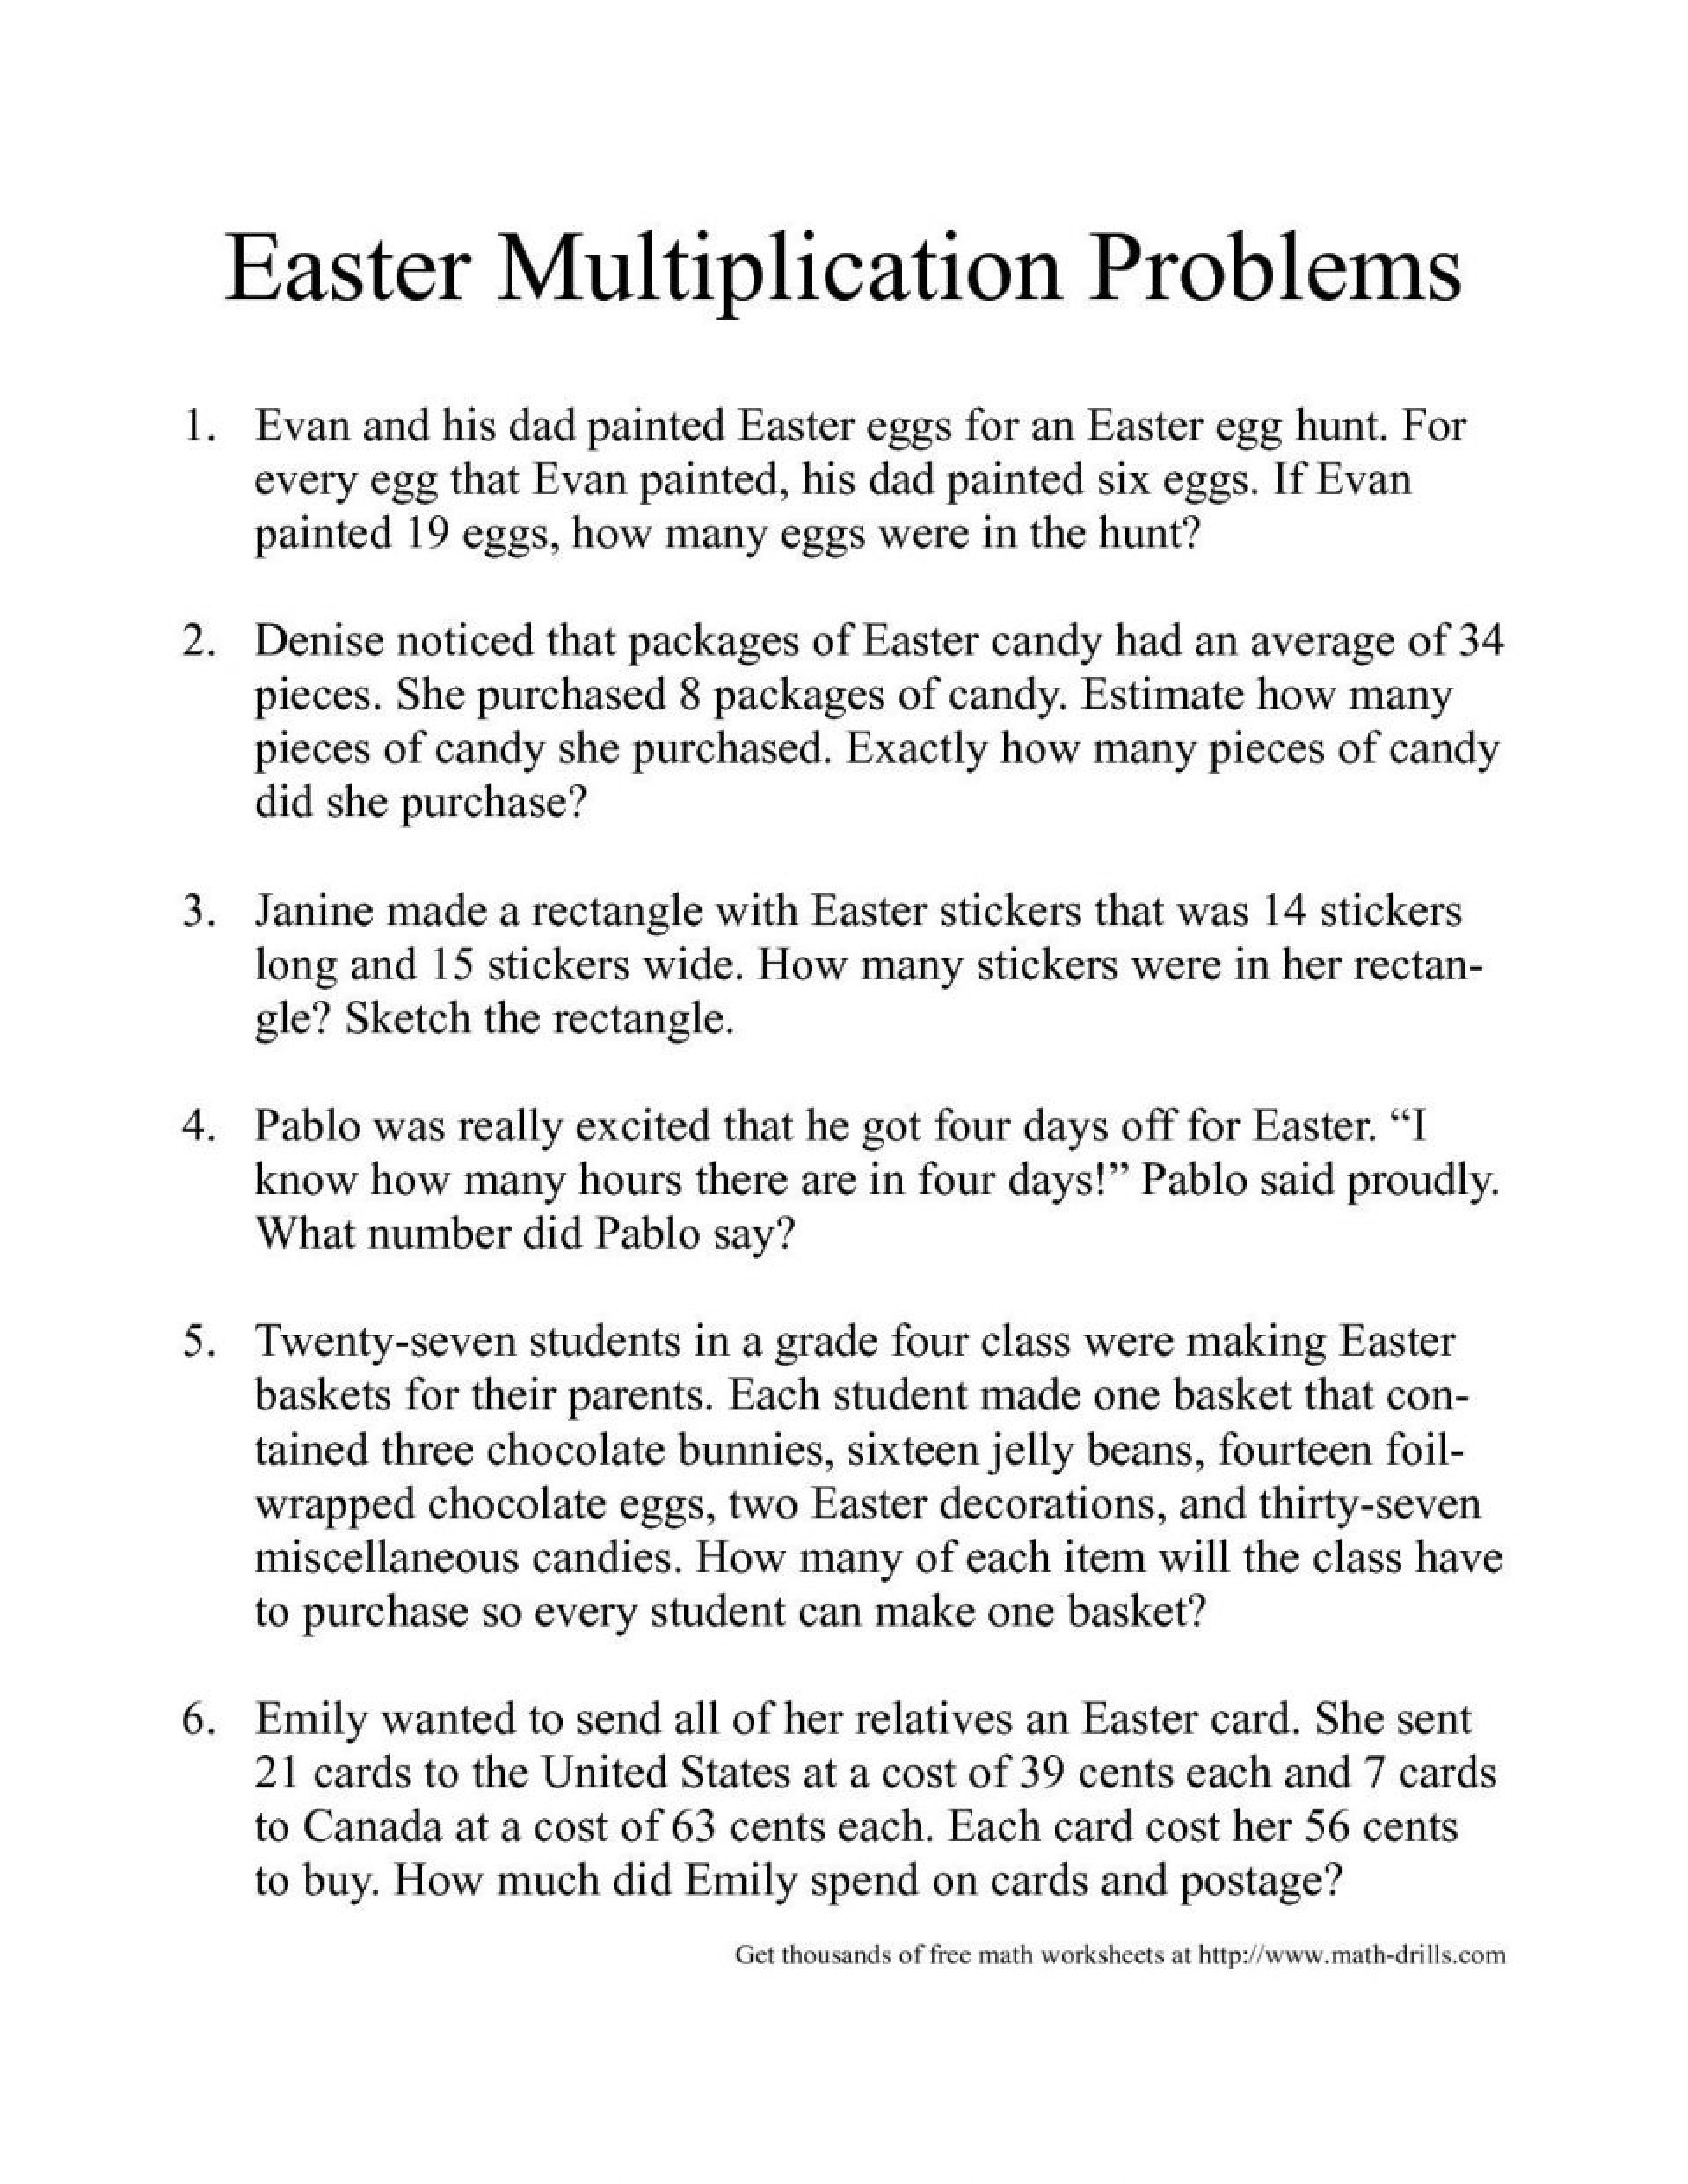 6th grade math word problems worksheets pdf db excelcom